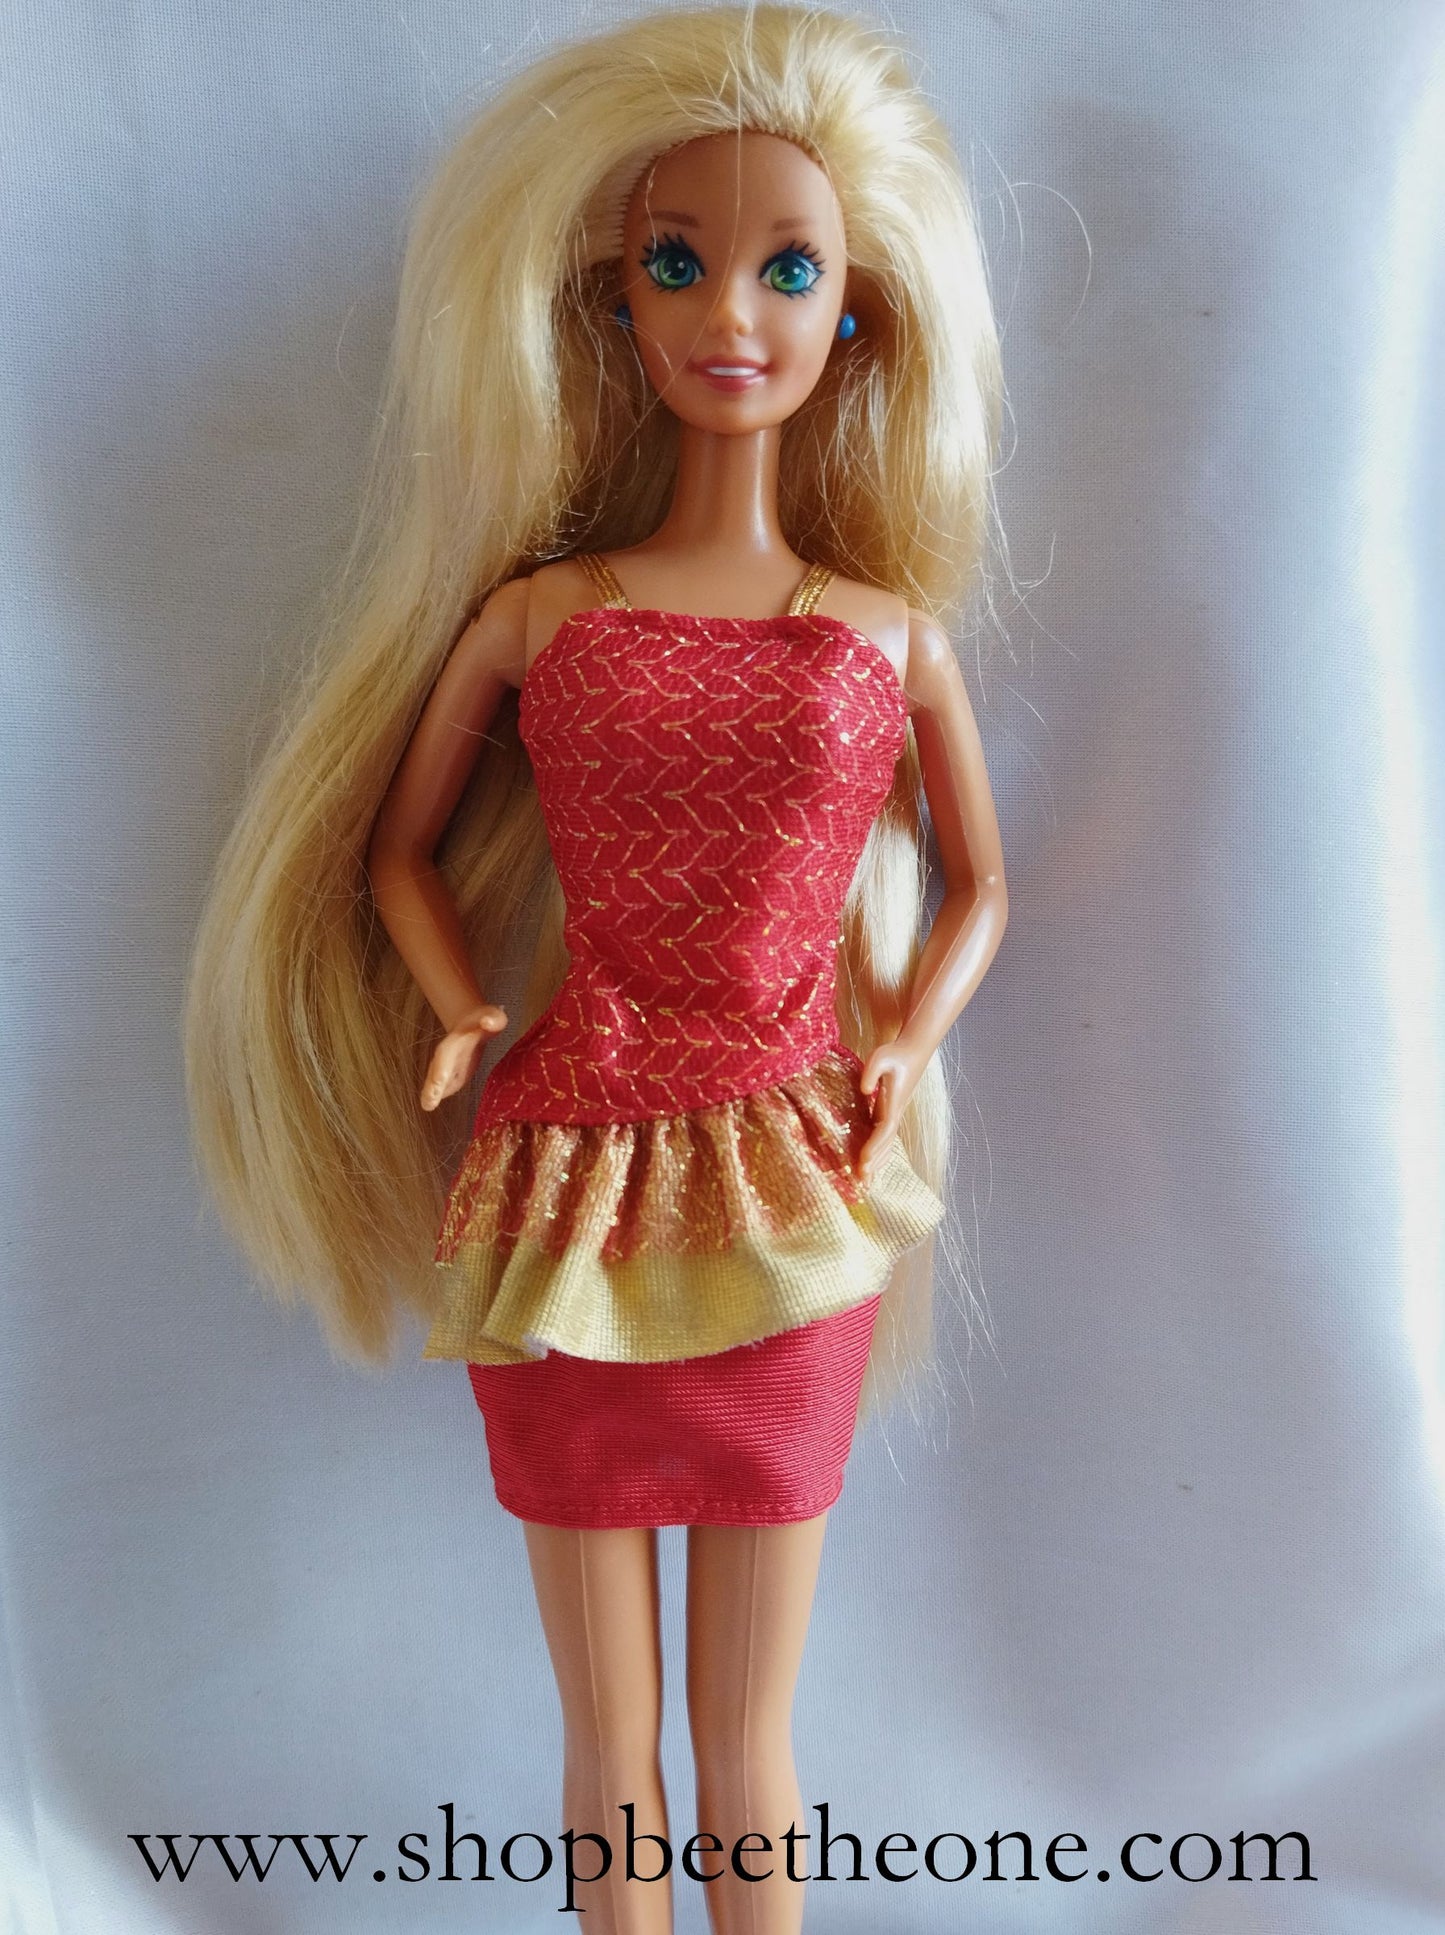 Barbie Habillage Collection Elégance (City Lights Fashions) #864 "rouge" - Mattel 1992 - Robe